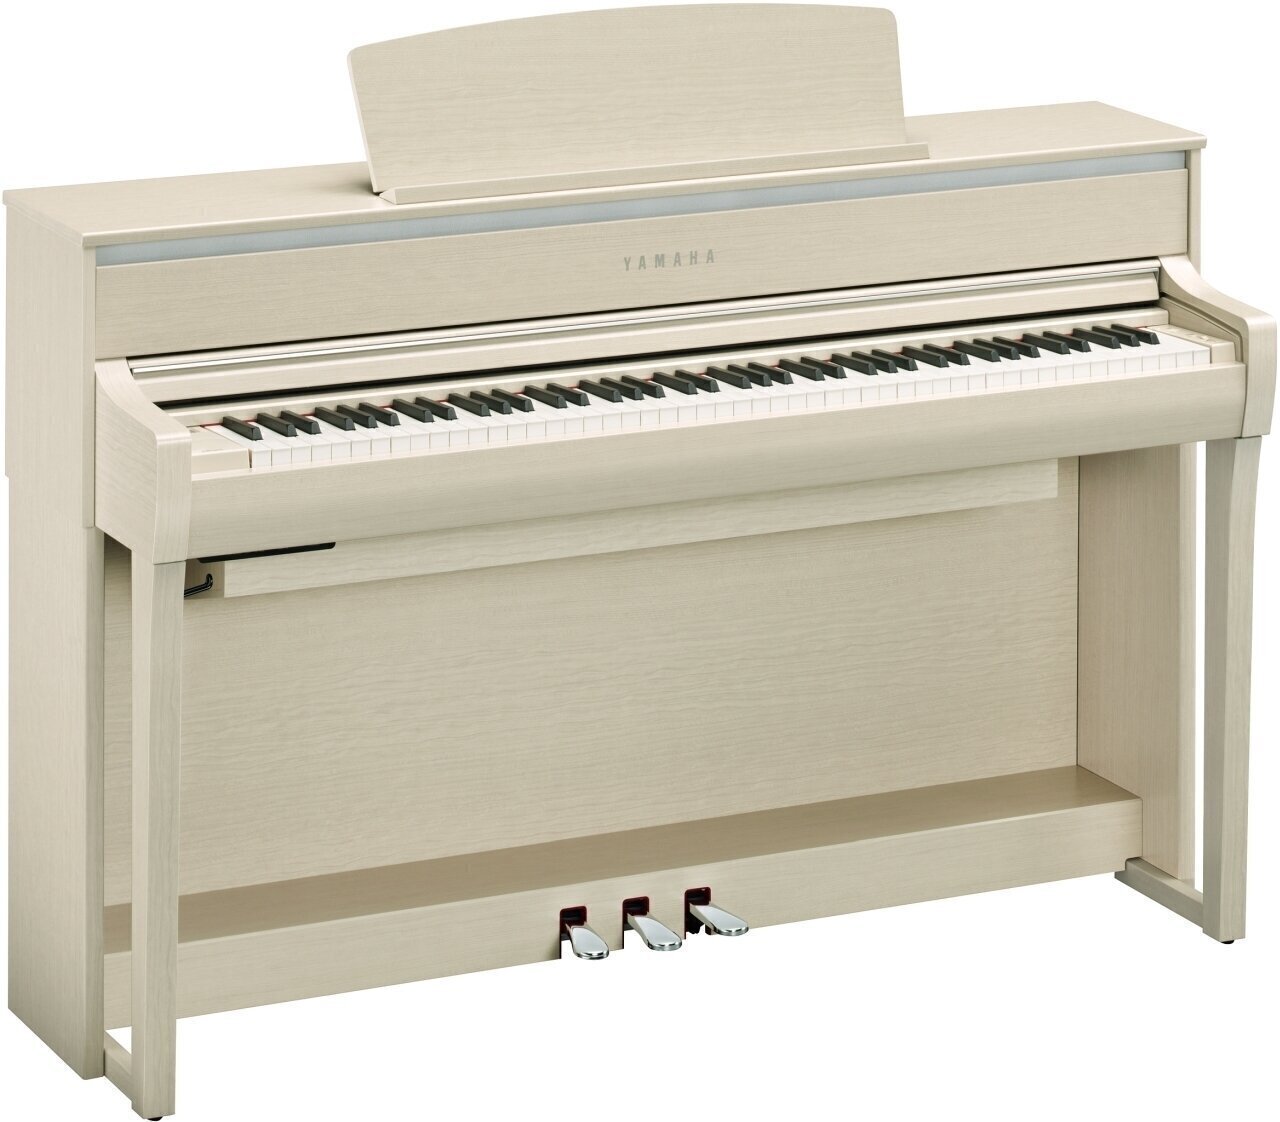 Piano digital Yamaha CLP 775 Ceniza blanca Piano digital